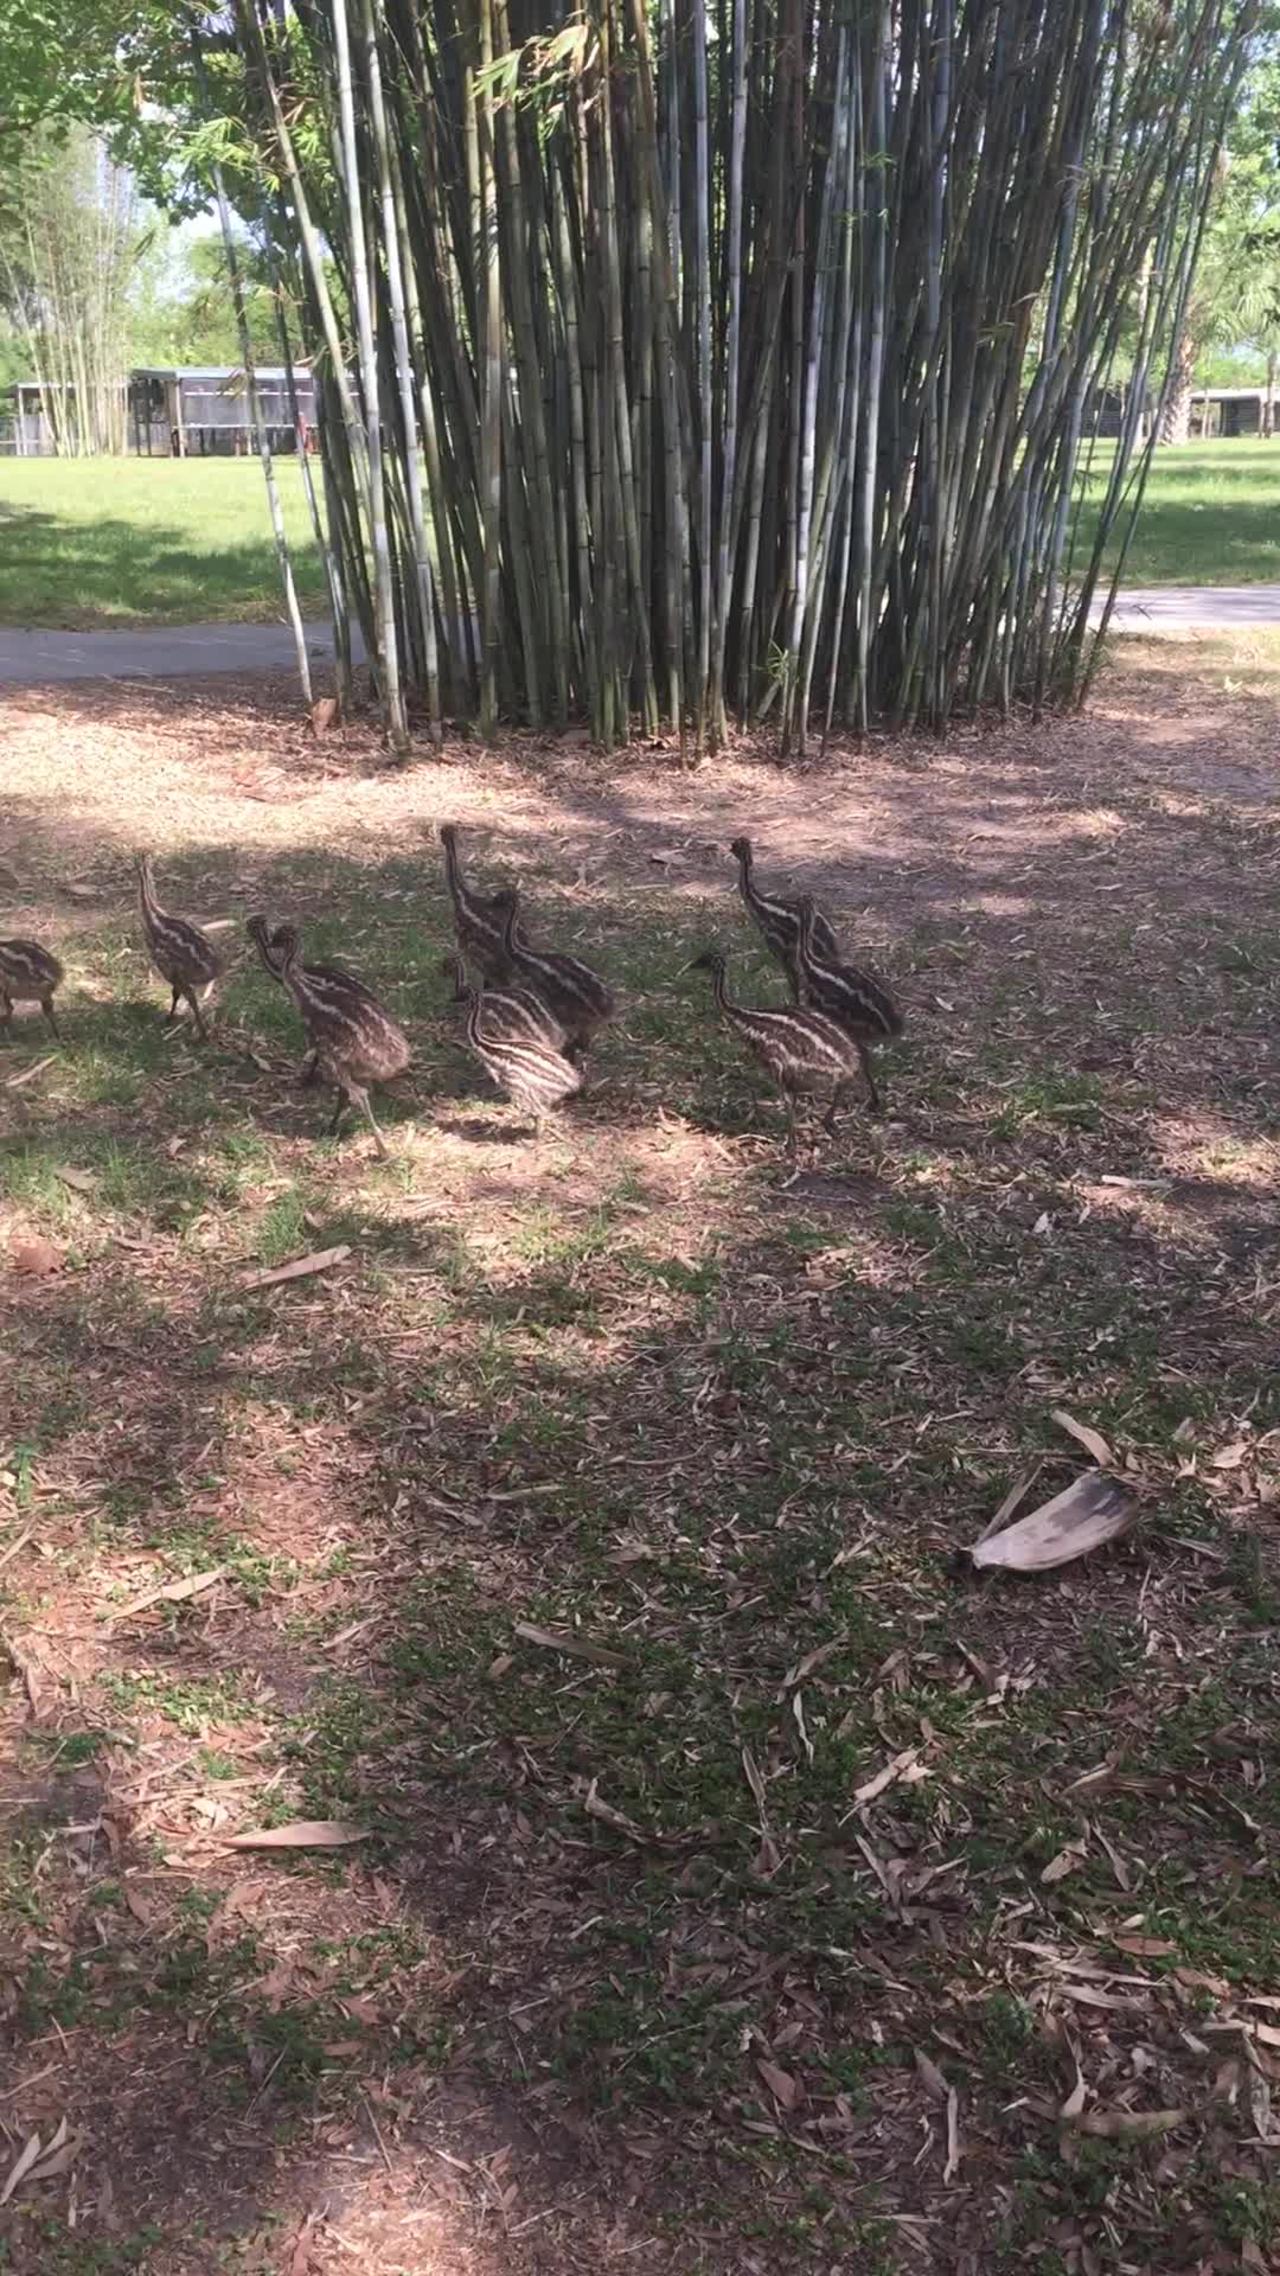 Emu Dad with his Emu chicks - The Running Bird Ranch